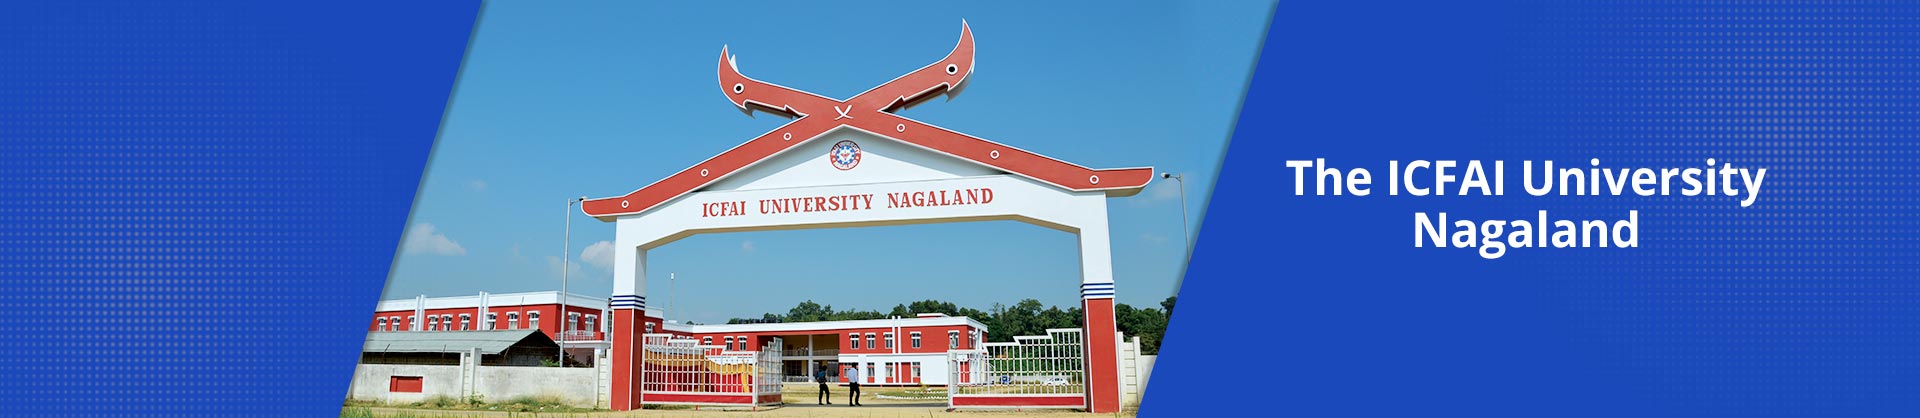 ICFAI-University-Nagaland